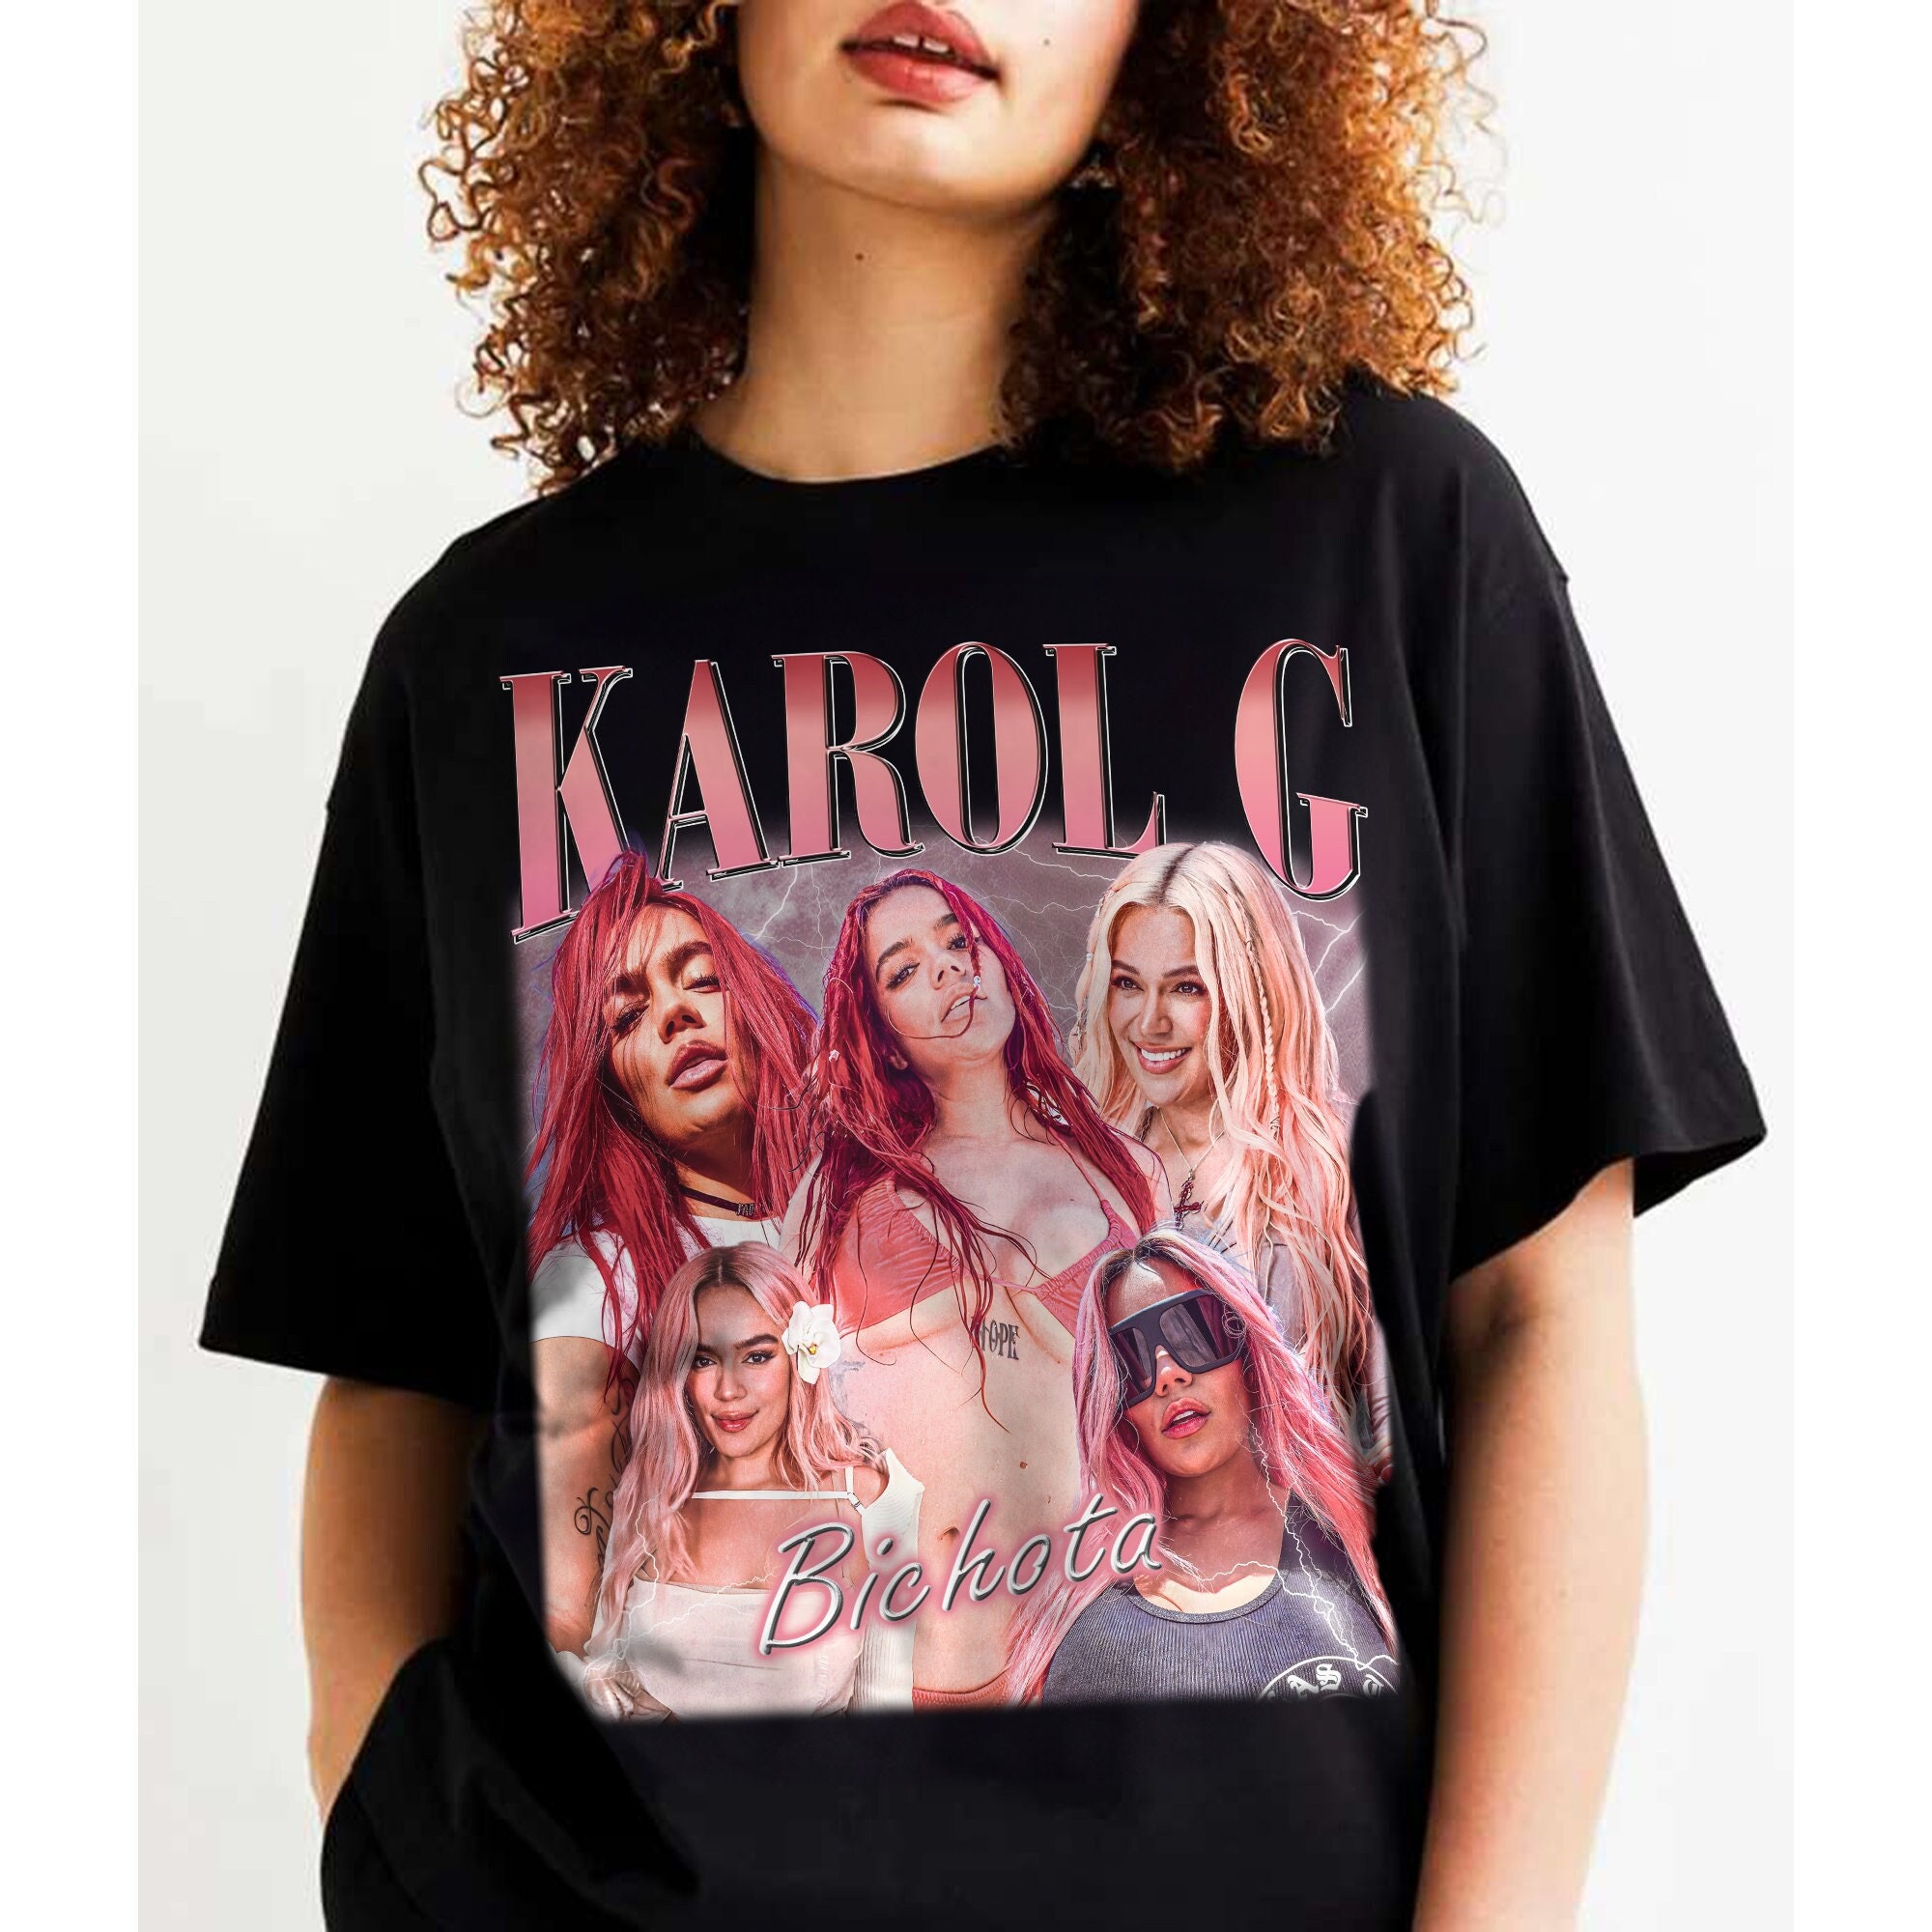 Bichota, Karol G, Beautiful Tee, Camiseta Karol G, Mamii, T-shirt, Karol  G svg, Gift, Plus size, sizes S-3XL